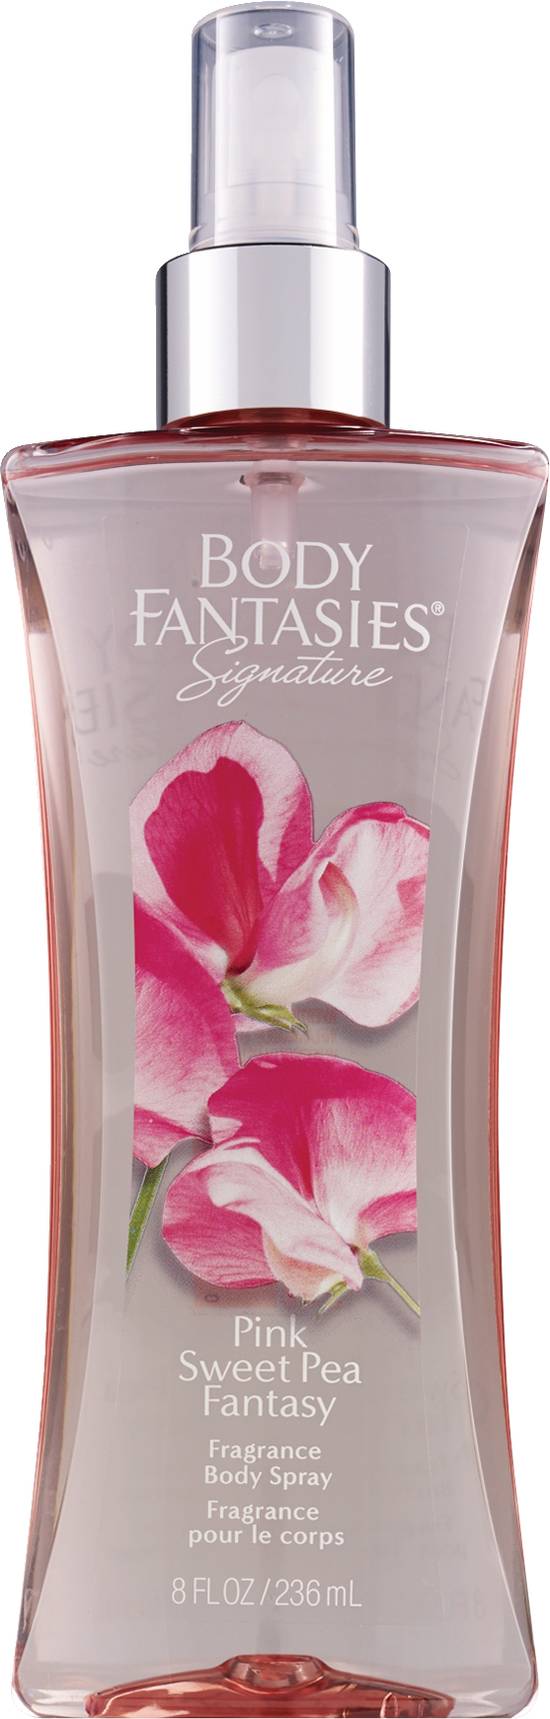 Body Fantasies Signature Fragrance Body Spray, Pink Sweet Pea Fantasy